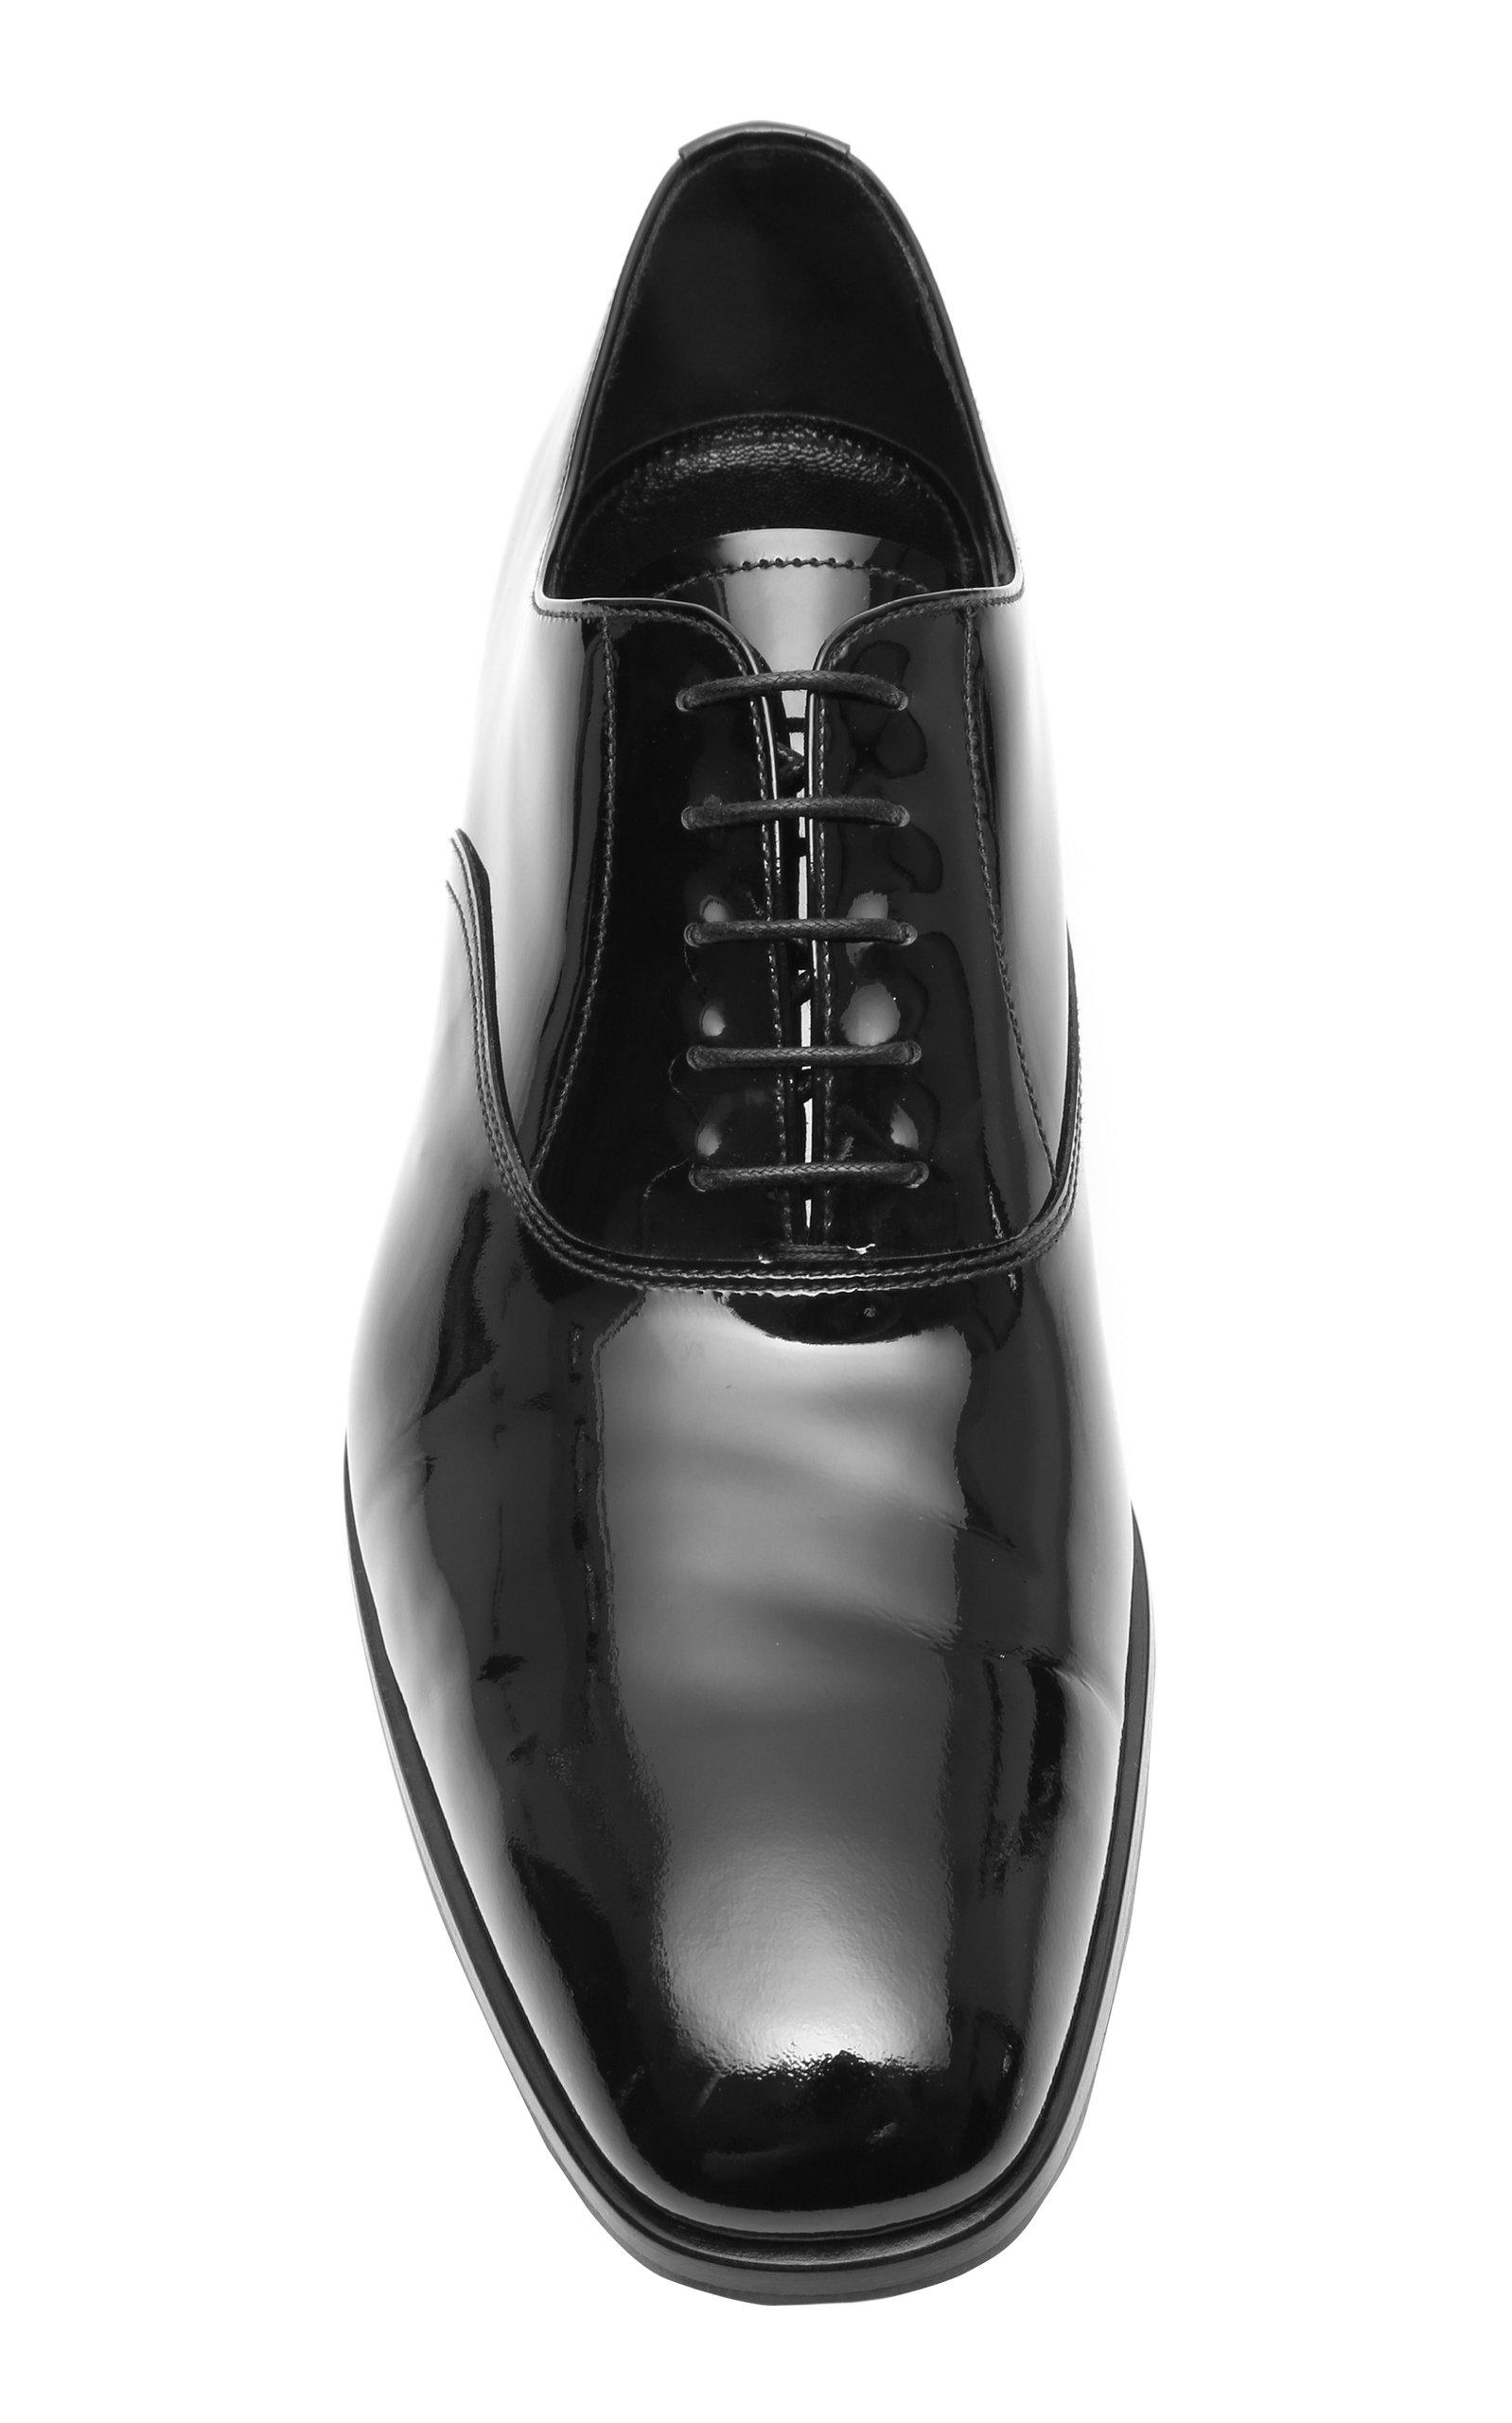 Prada Patent Leather Tuxedo Shoes in 